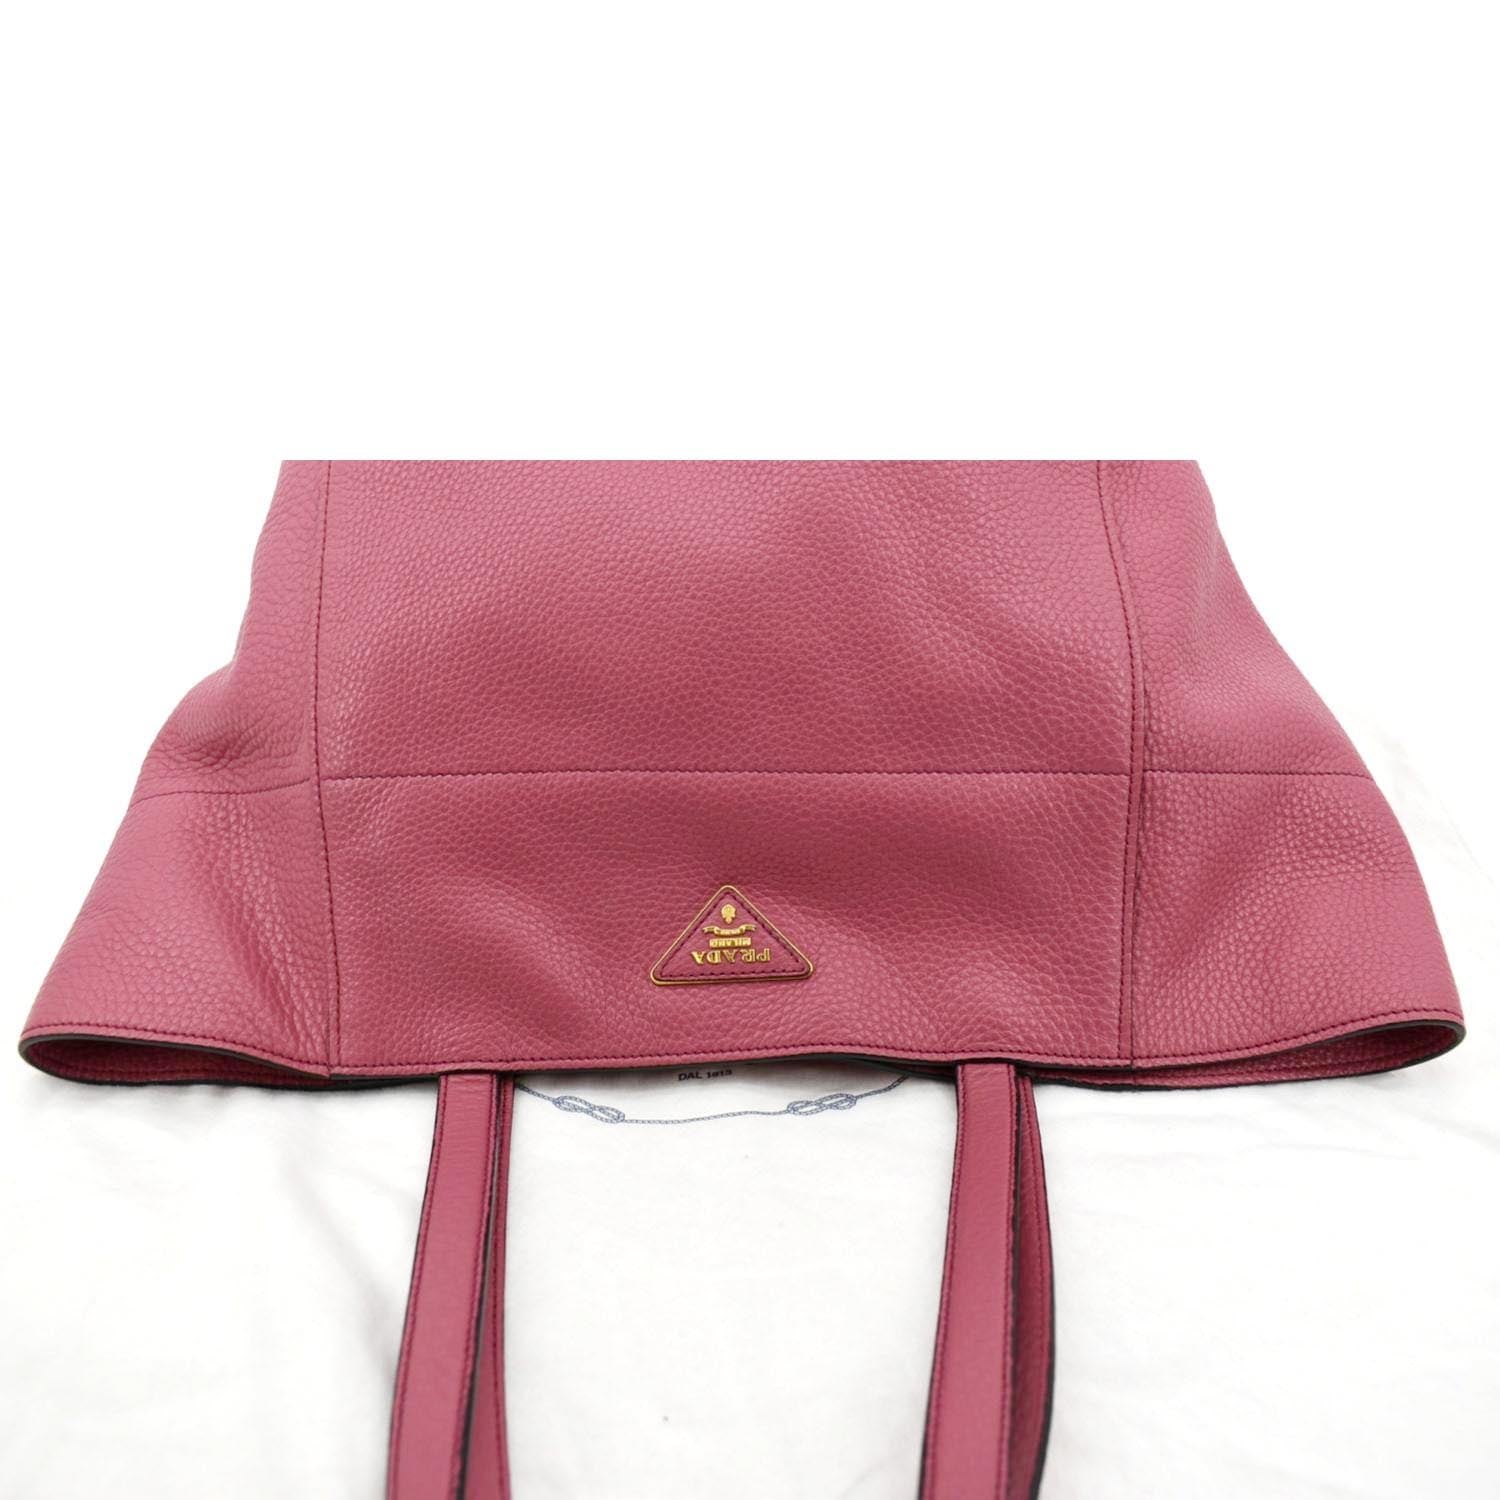 pre-loved authentic PRADA black/pink PURSE handbag key fob bag charm $350 |  eBay